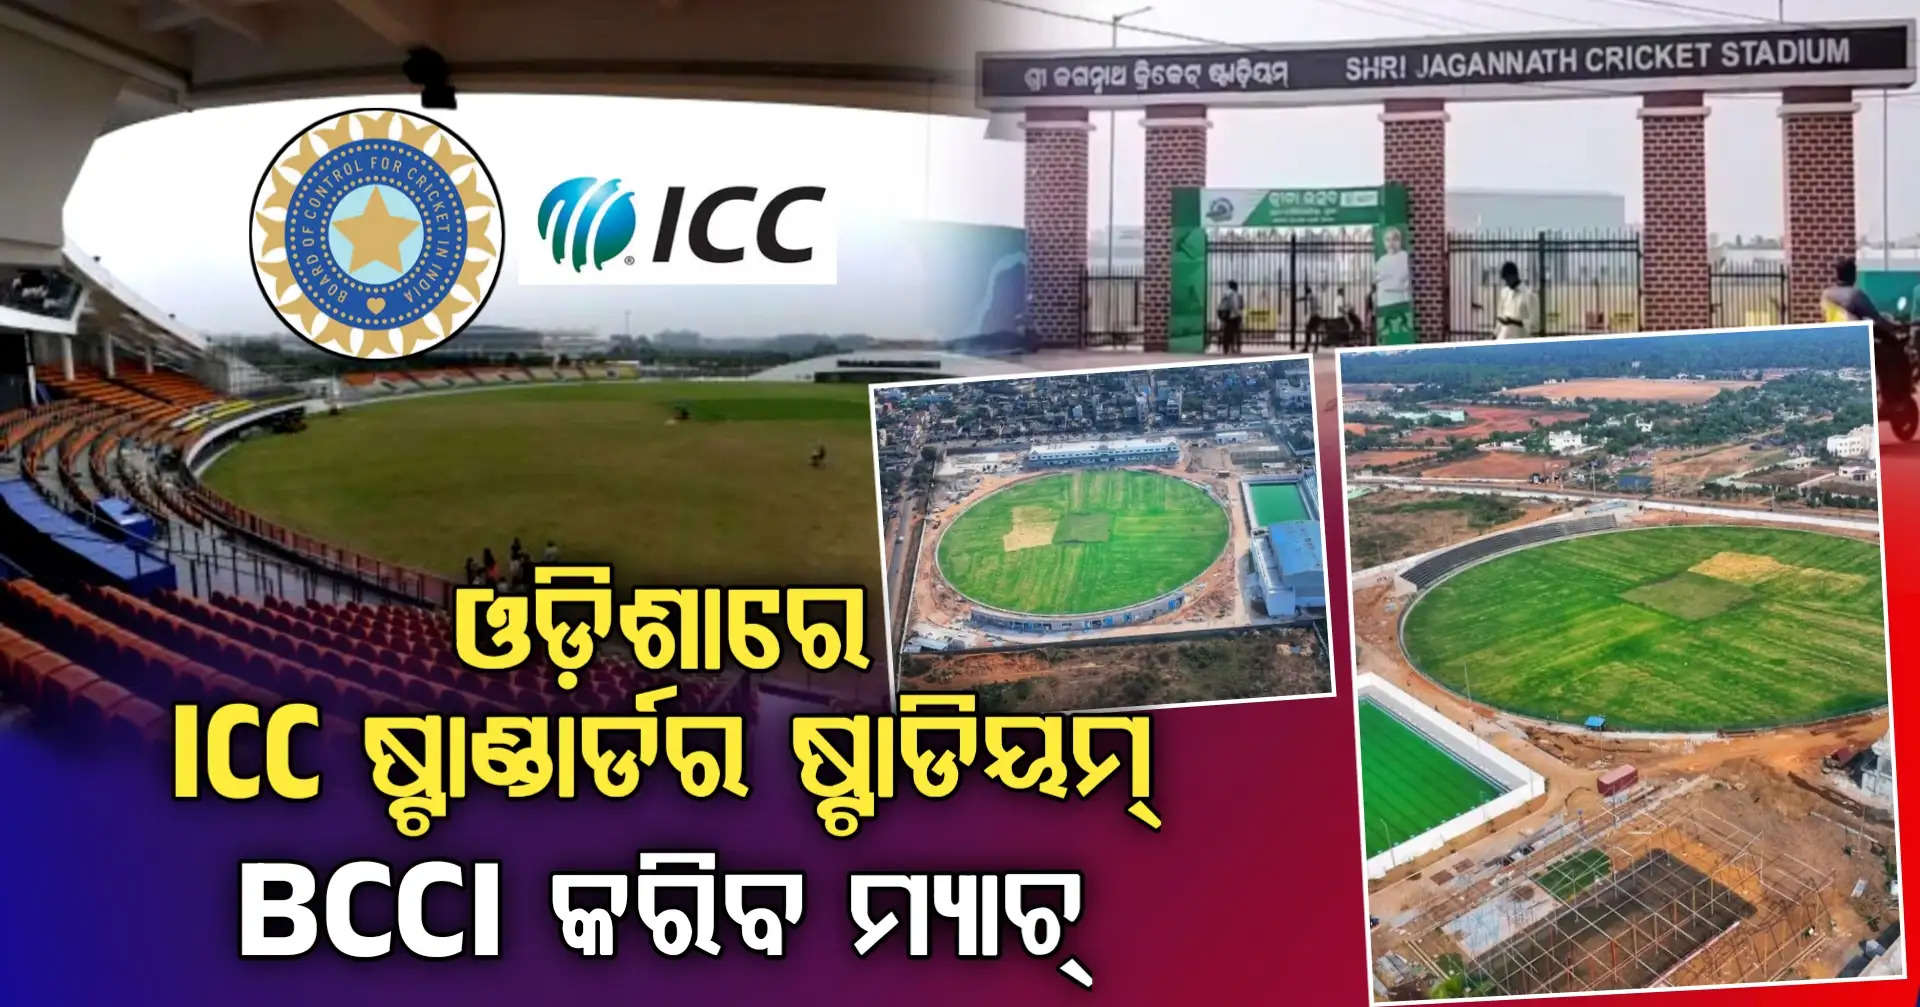 Jagannath cricket stadium puri